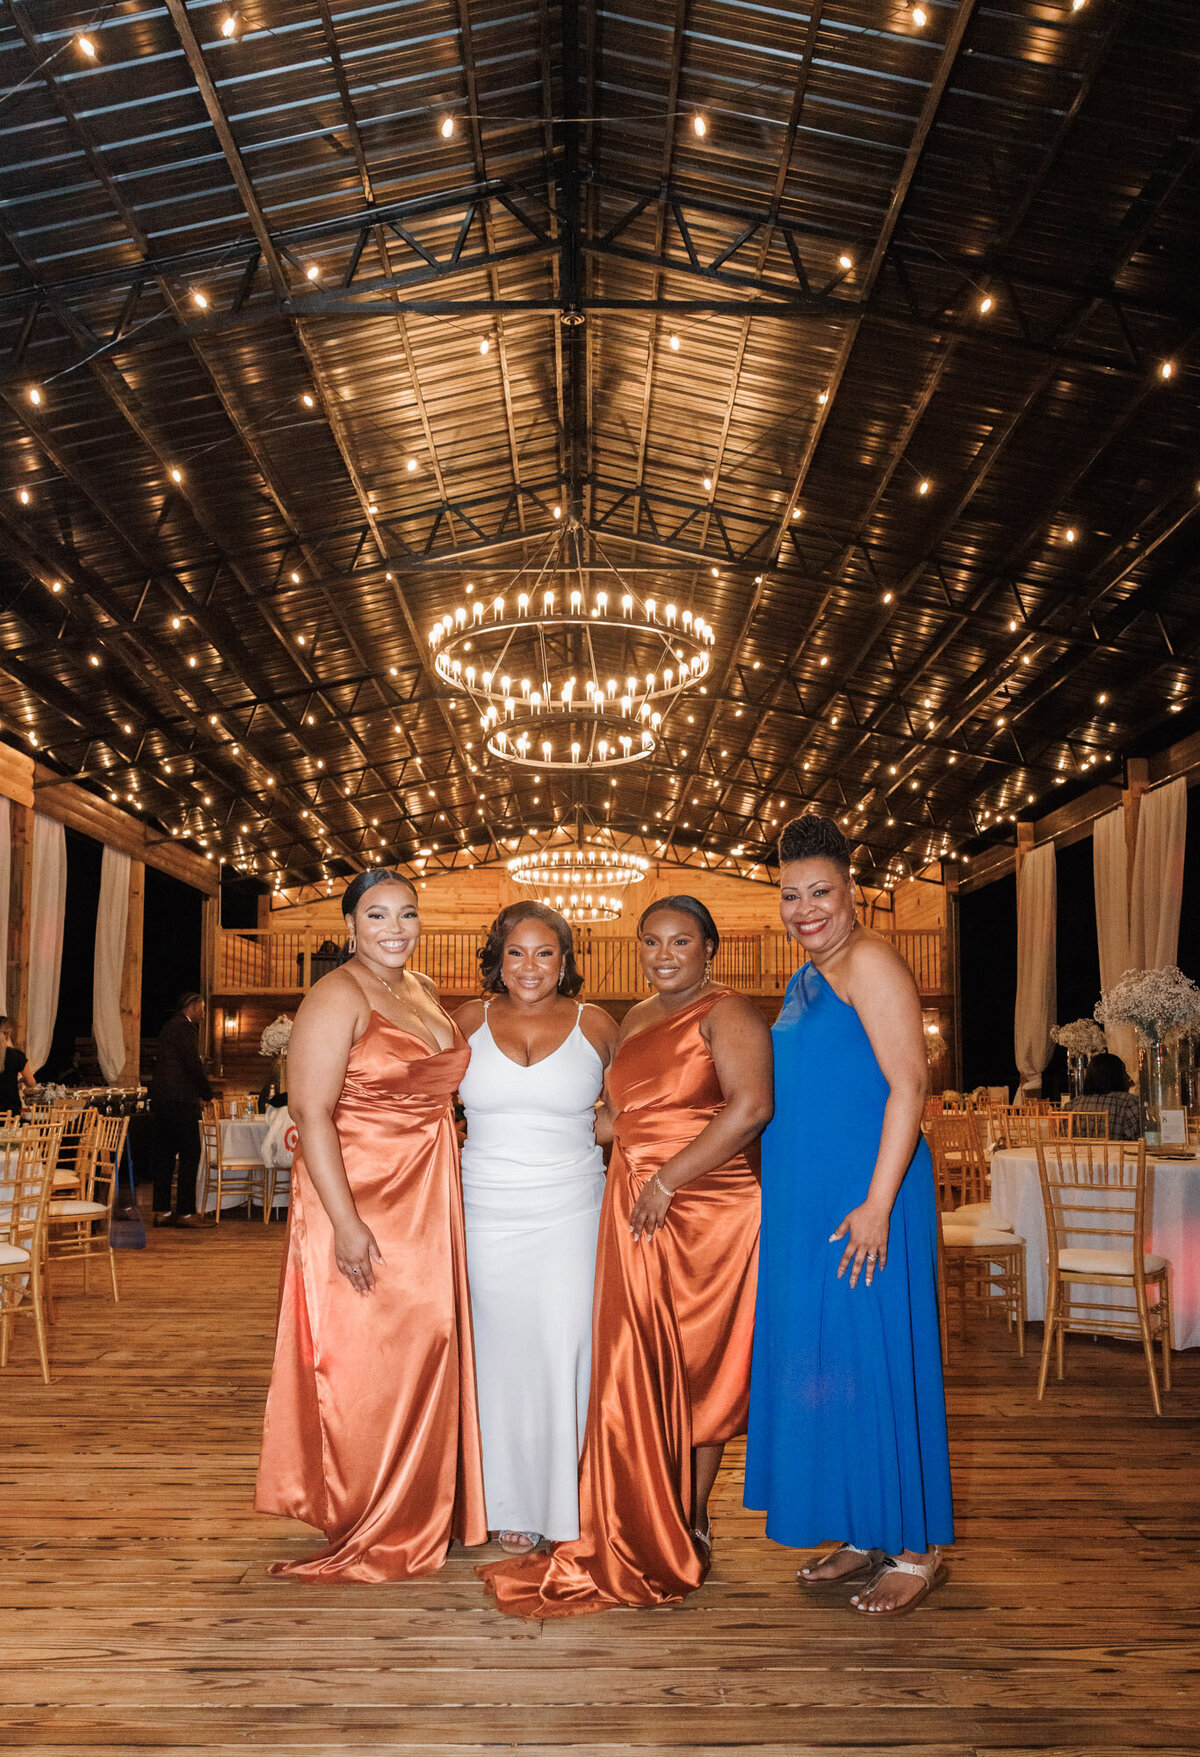 Michael and Mishka-Wedding-Green Cabin Ranch-Astatula, FL-FL Wedding Photographer-Orlando Photographer-Emily Pillon Photography-S-120423-460